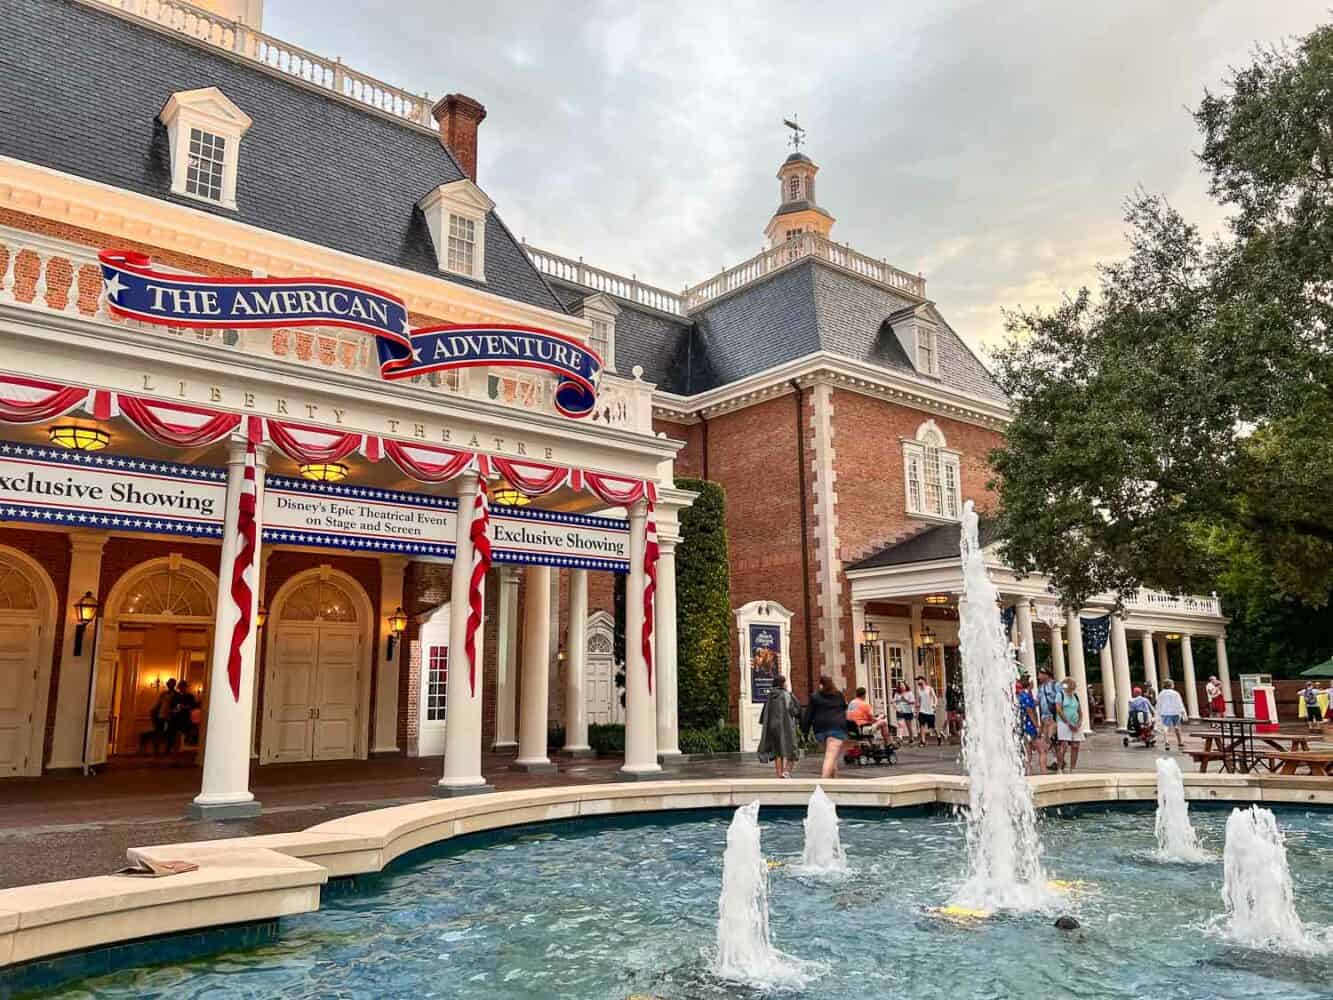 Entrance to The American Adventure Show at Epcot, Disney World Orlando